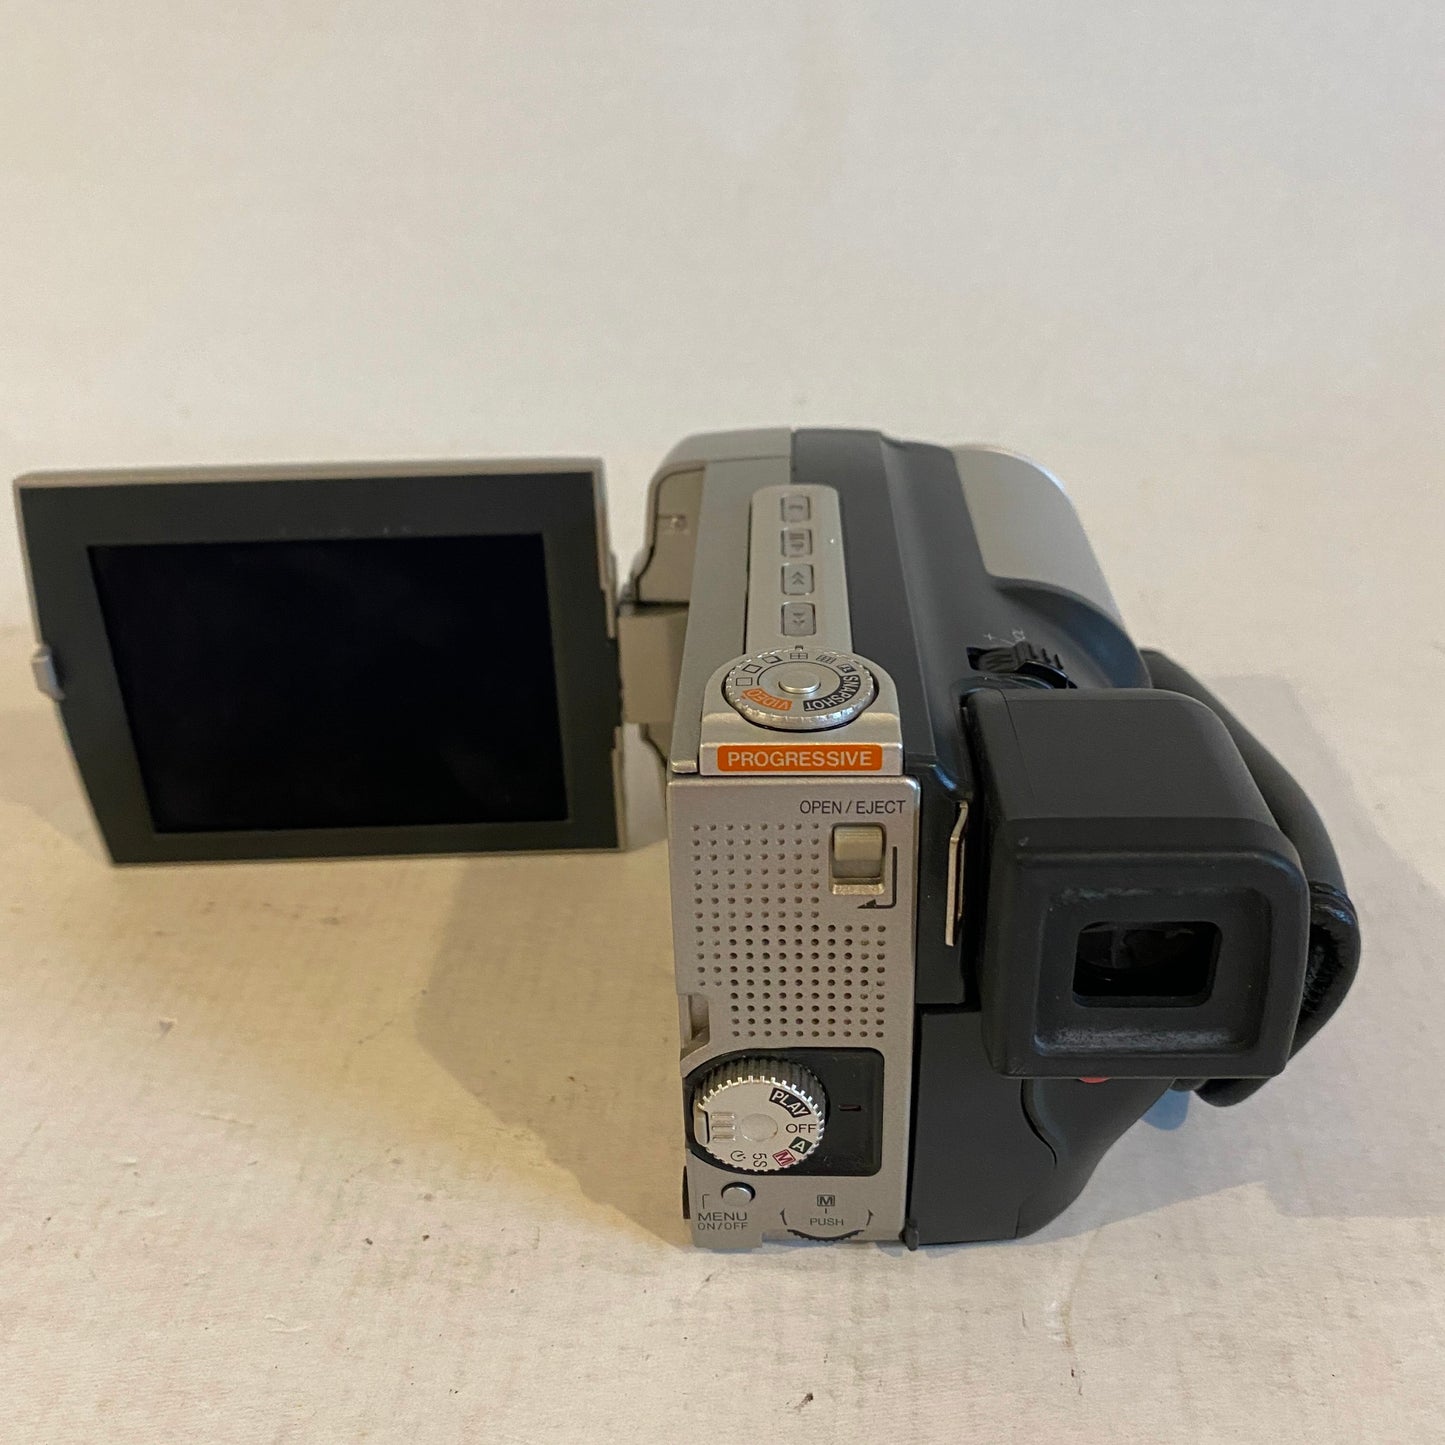 JVC 200x Digital Zoom Stereo MiniDV Camcorder - GR-DVL9000